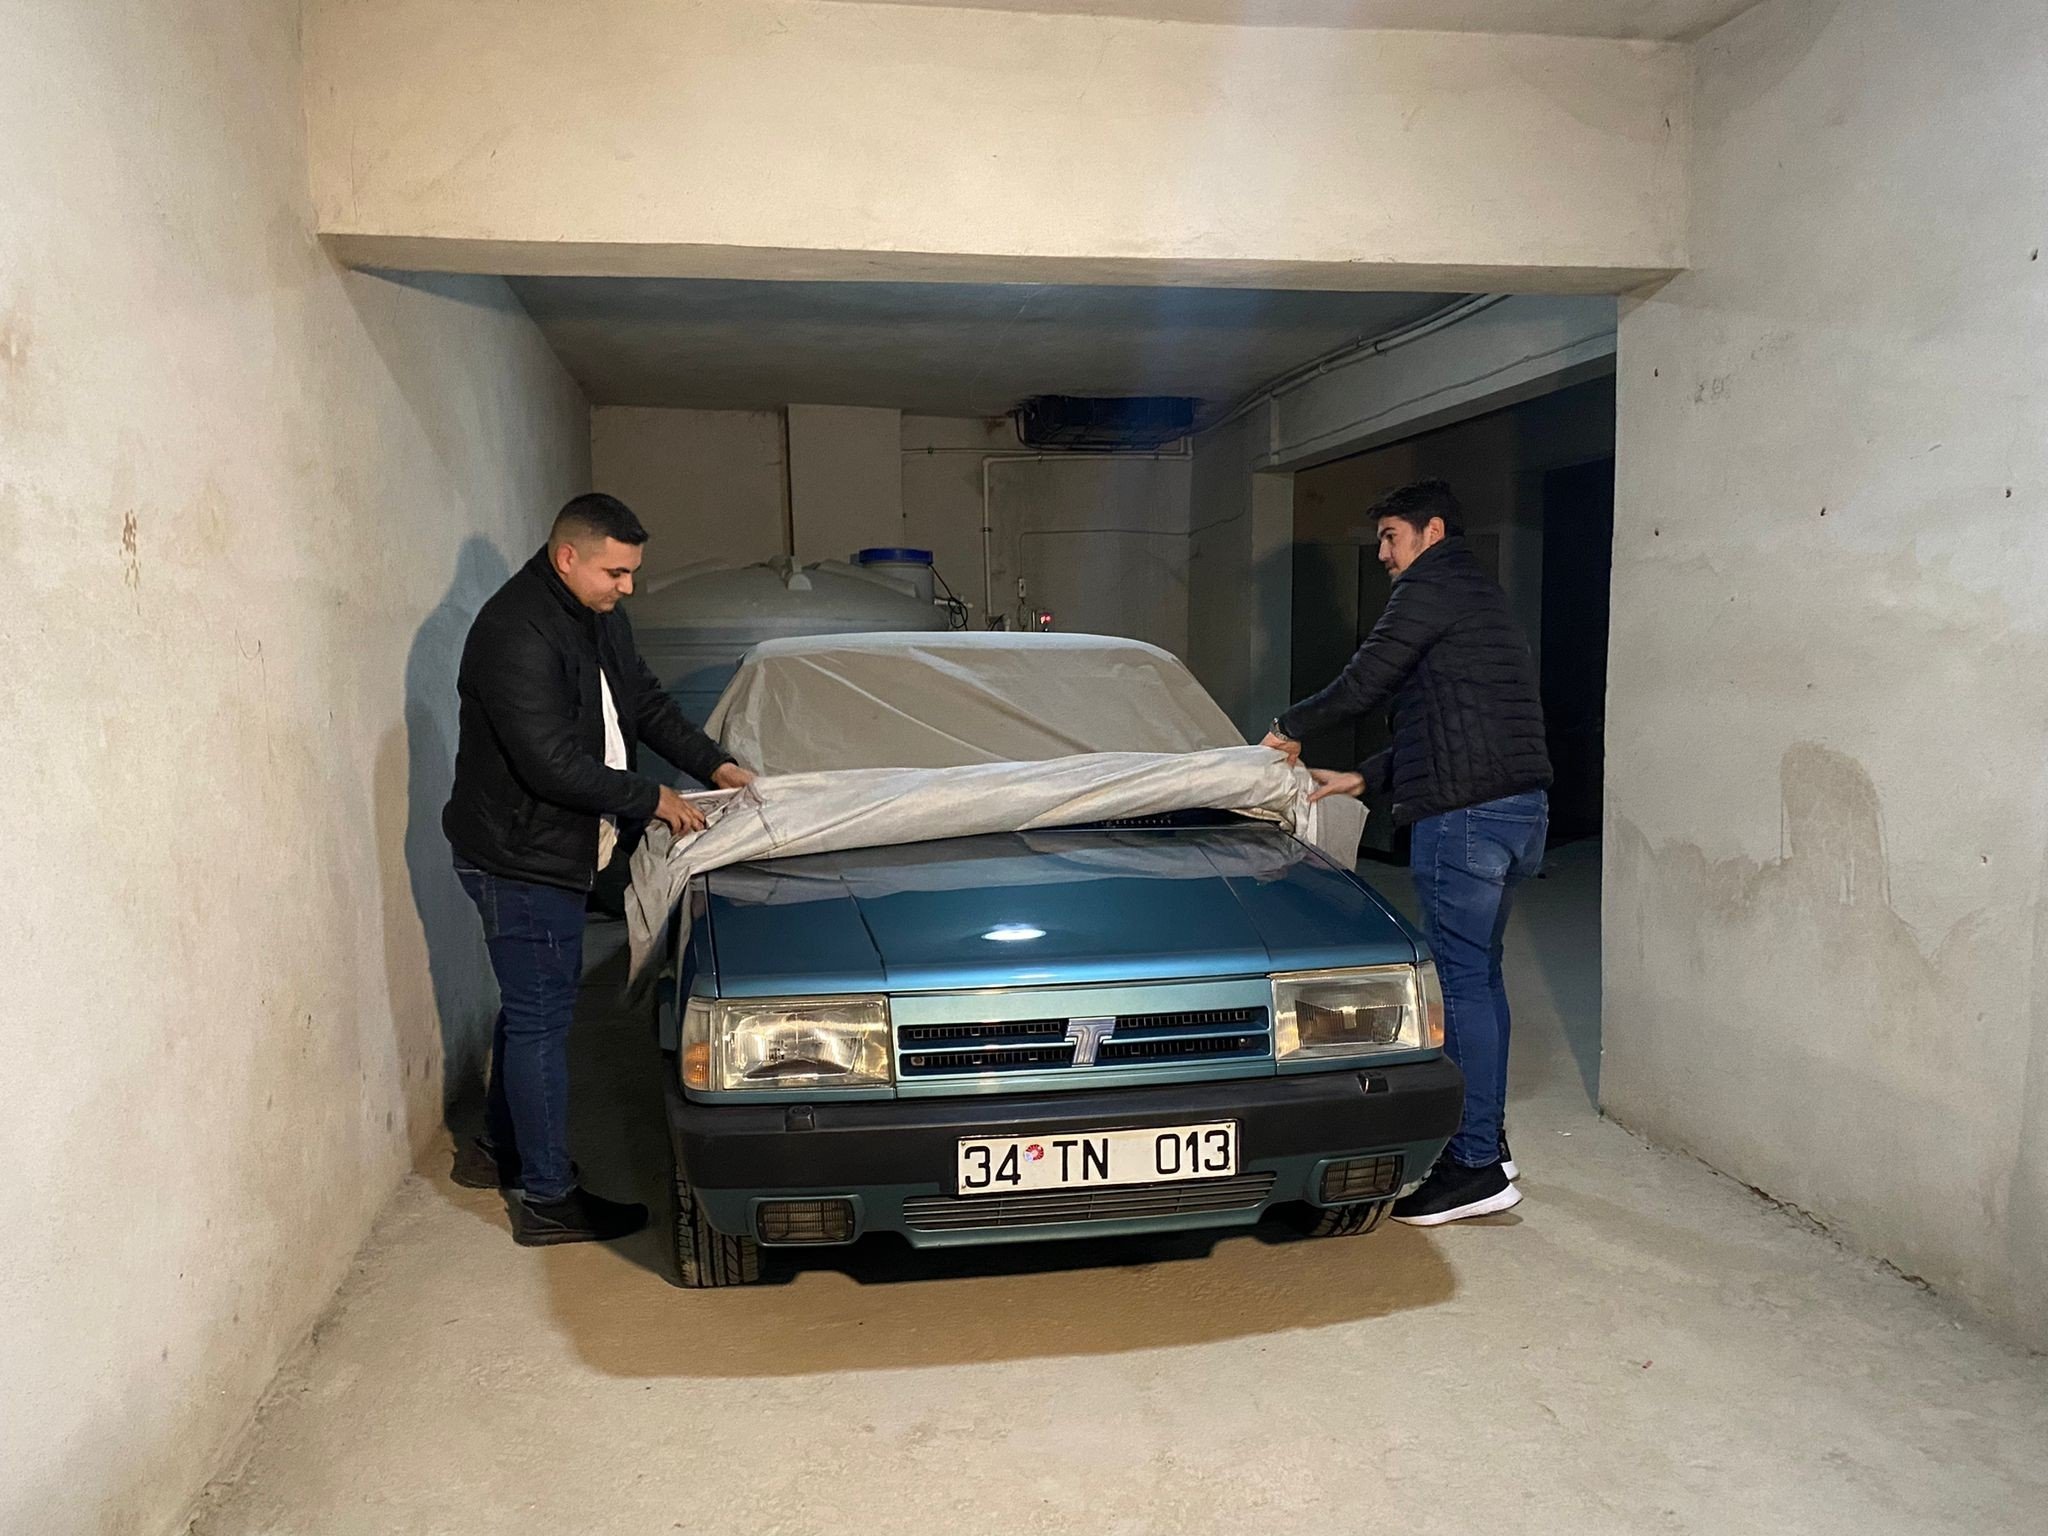 Italian Garage Queen: The 1993 Fiat-Tofaş Doğan SLX, in its garage, Istanbul, Turkey, Dec. 14, 2021 (IHA Photo)